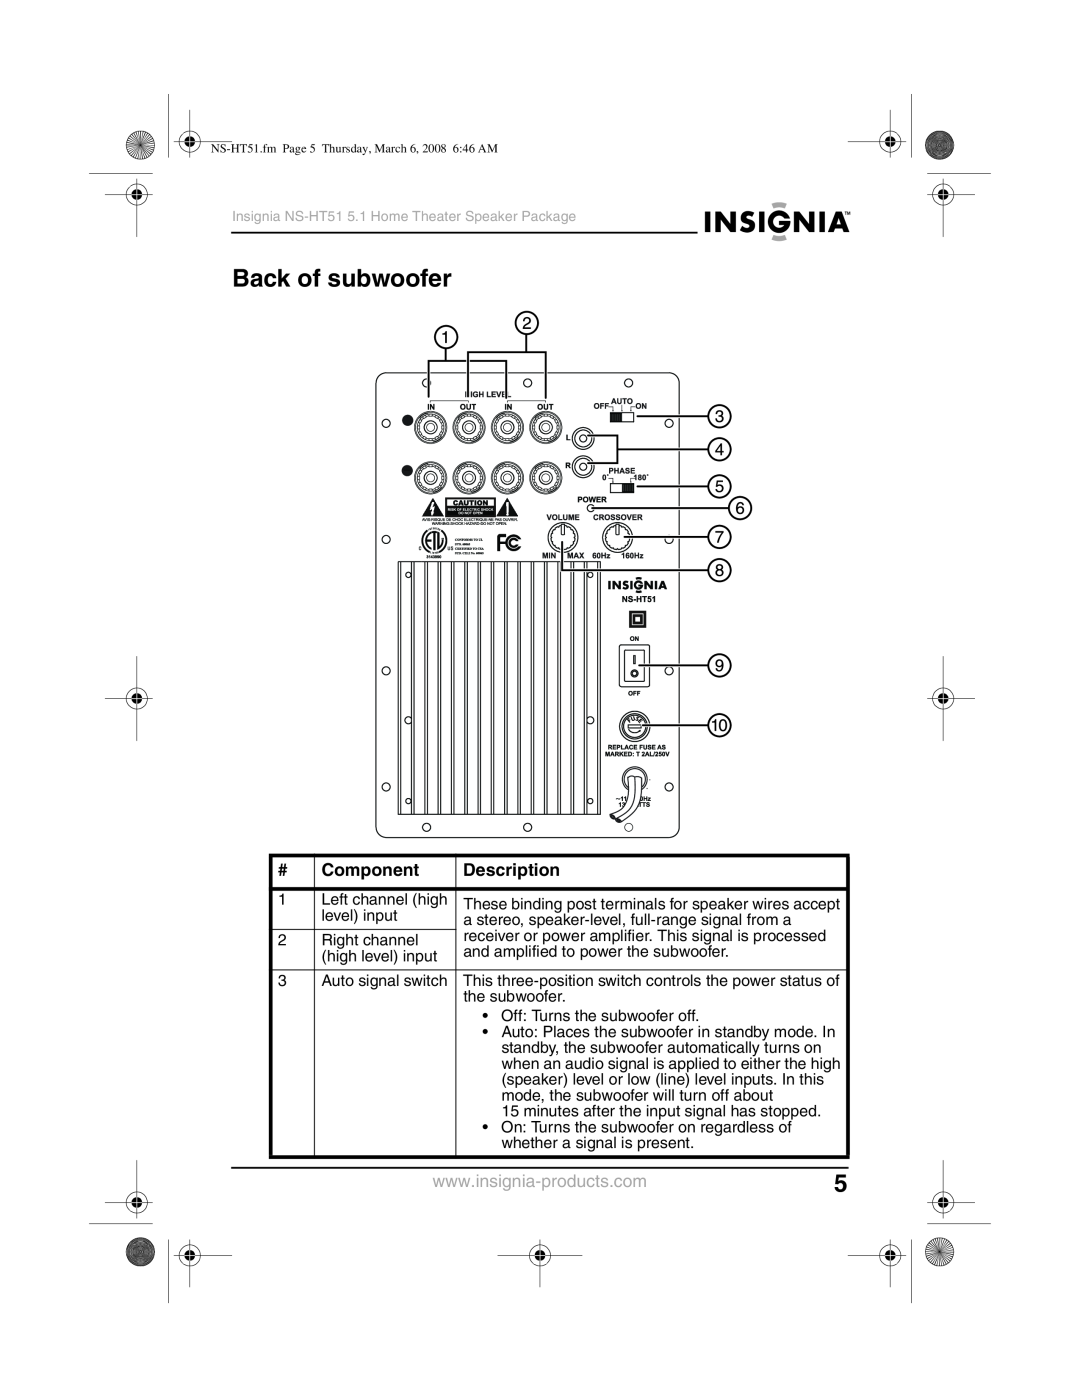 Insignia NS-HT51 manual Back of subwoofer, Component, Description 